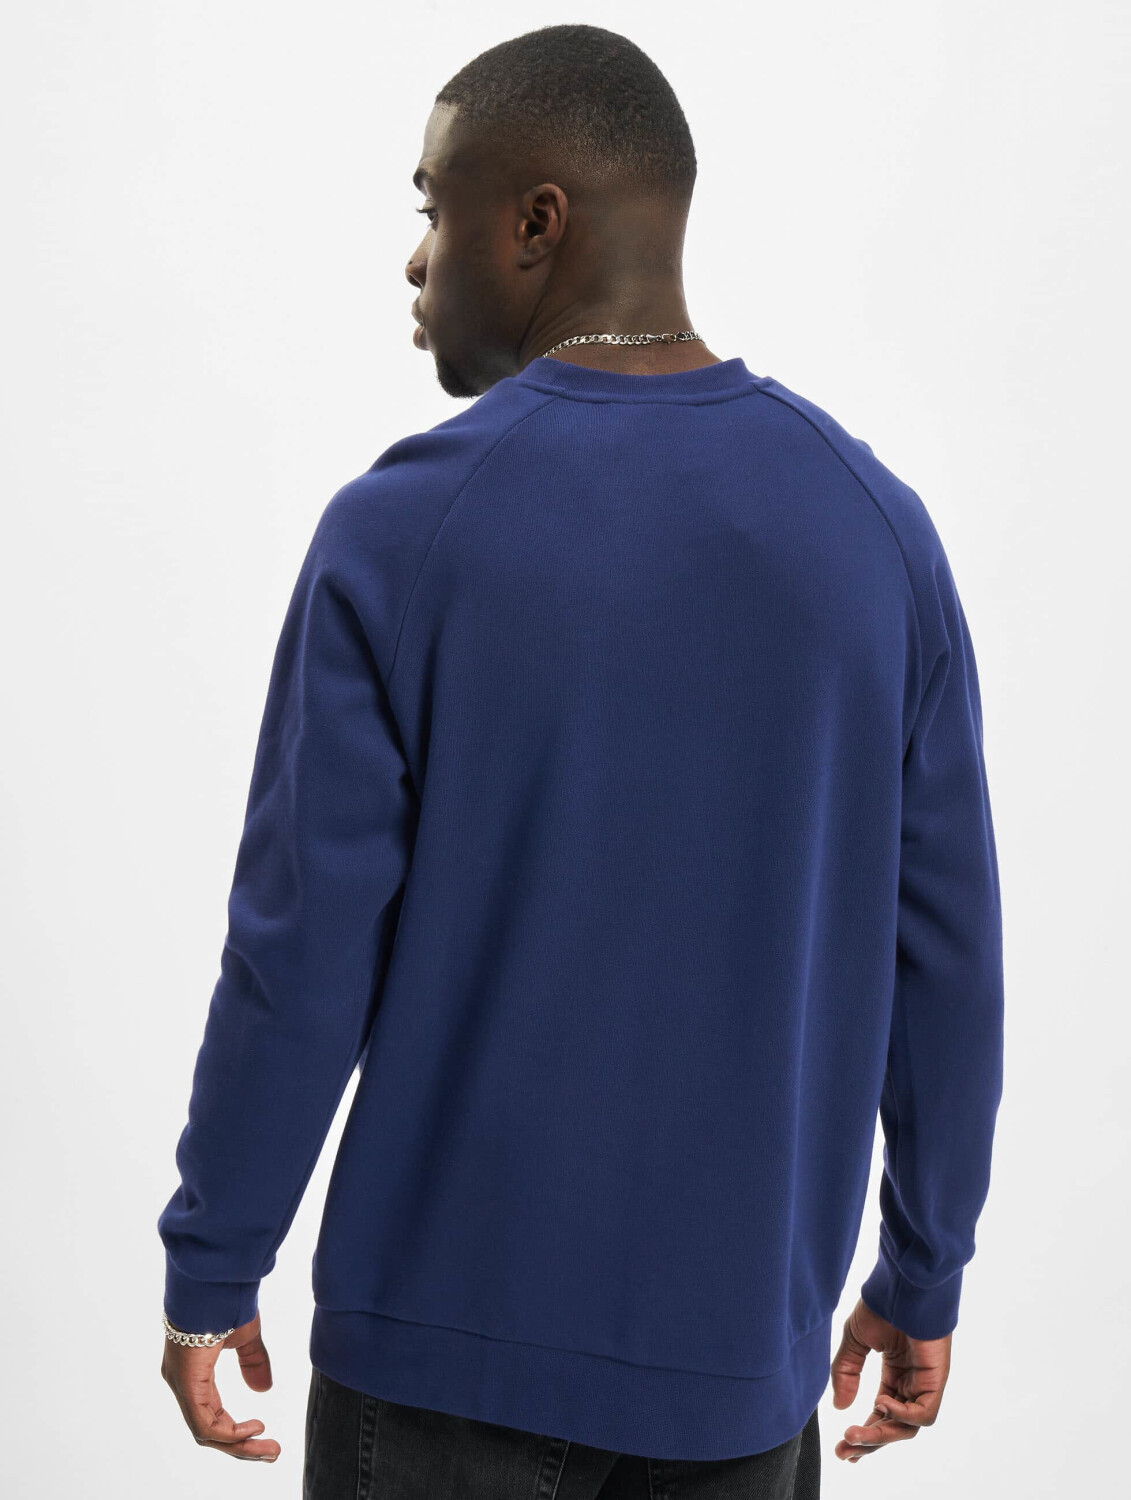 Buy Adidas adicolor Classics Trefoil Sweatshirt dark blue (H06654) from  £22.99 (Today) – Best Deals on | 